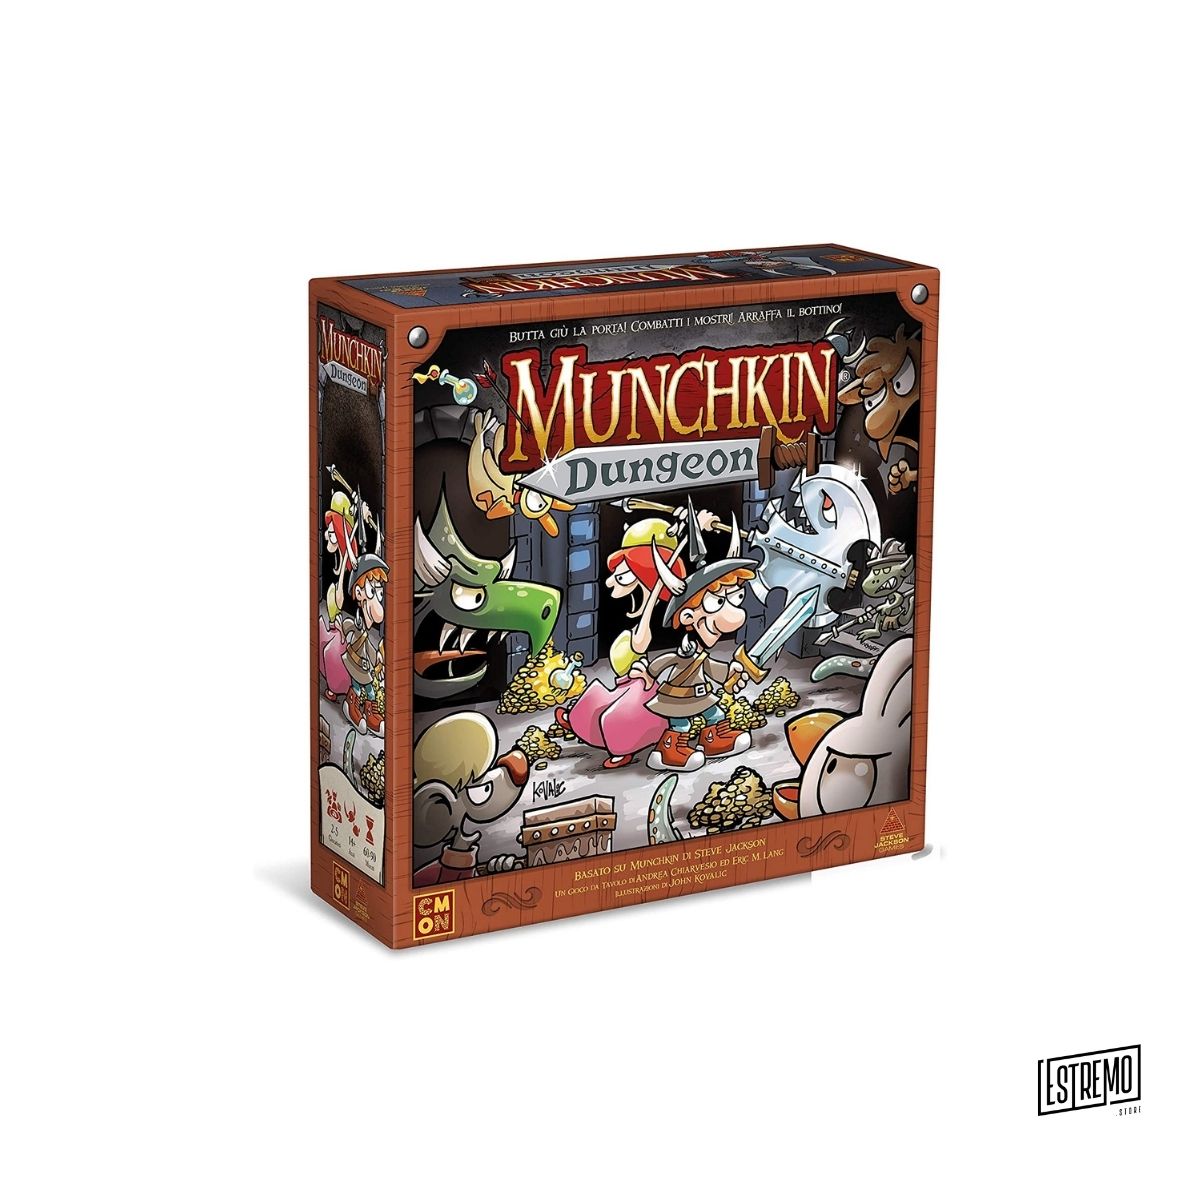 Munchkin - Dungeon